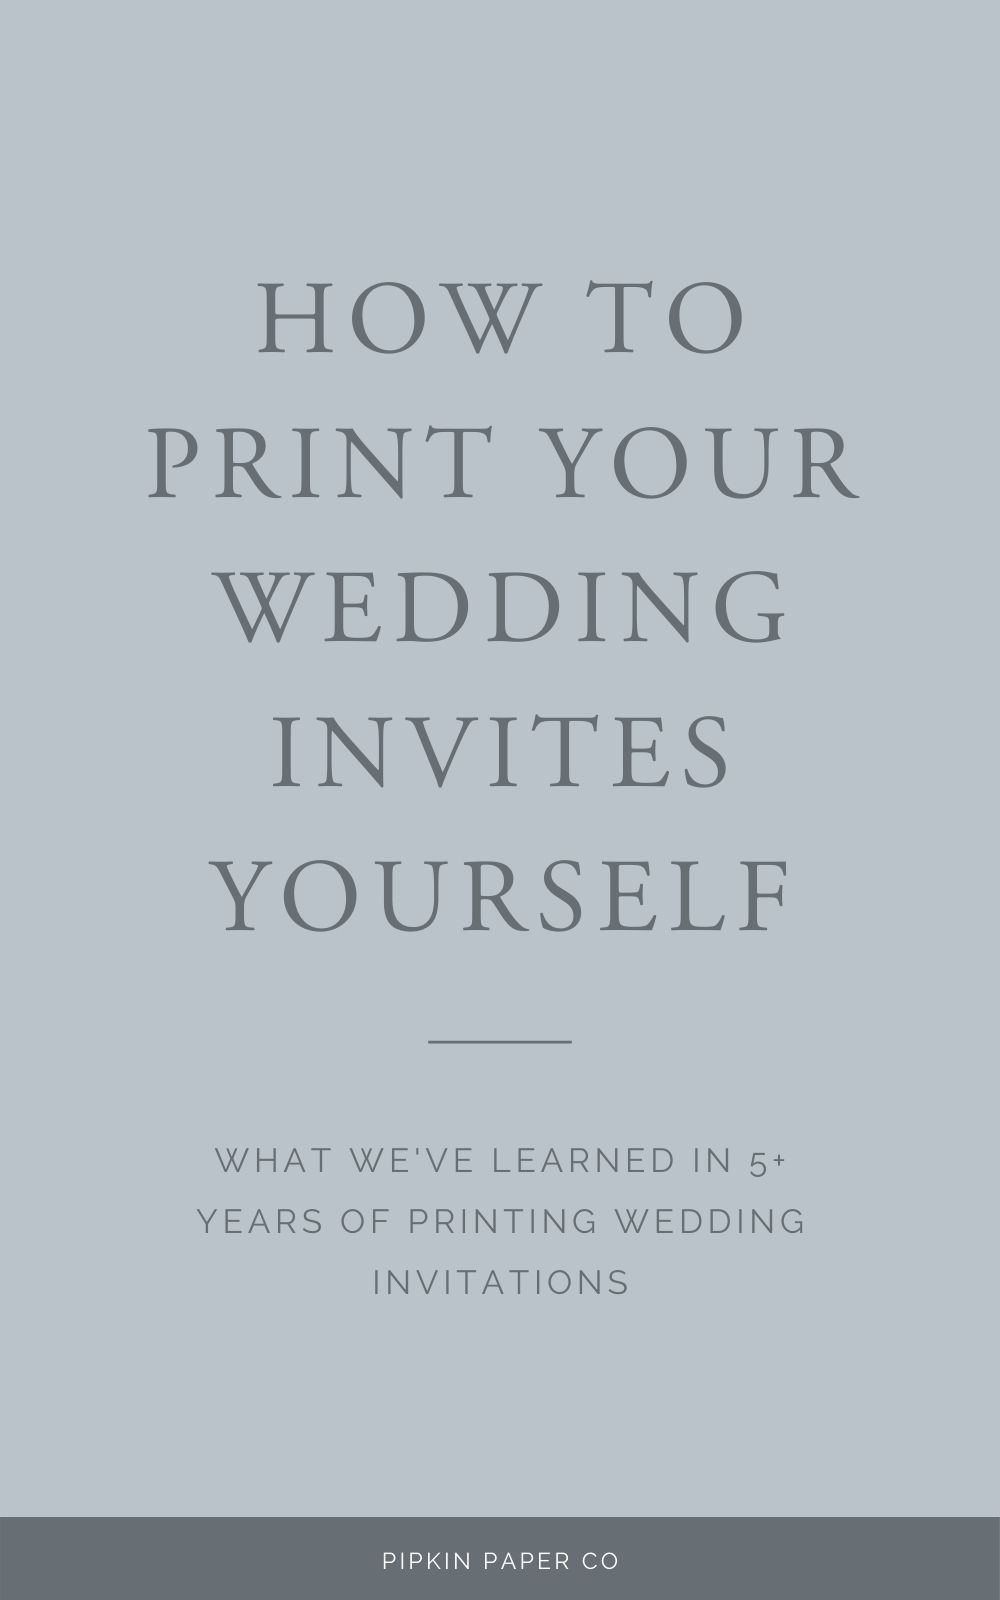 How to Make Wedding Invitations | Pipkin Paper Company